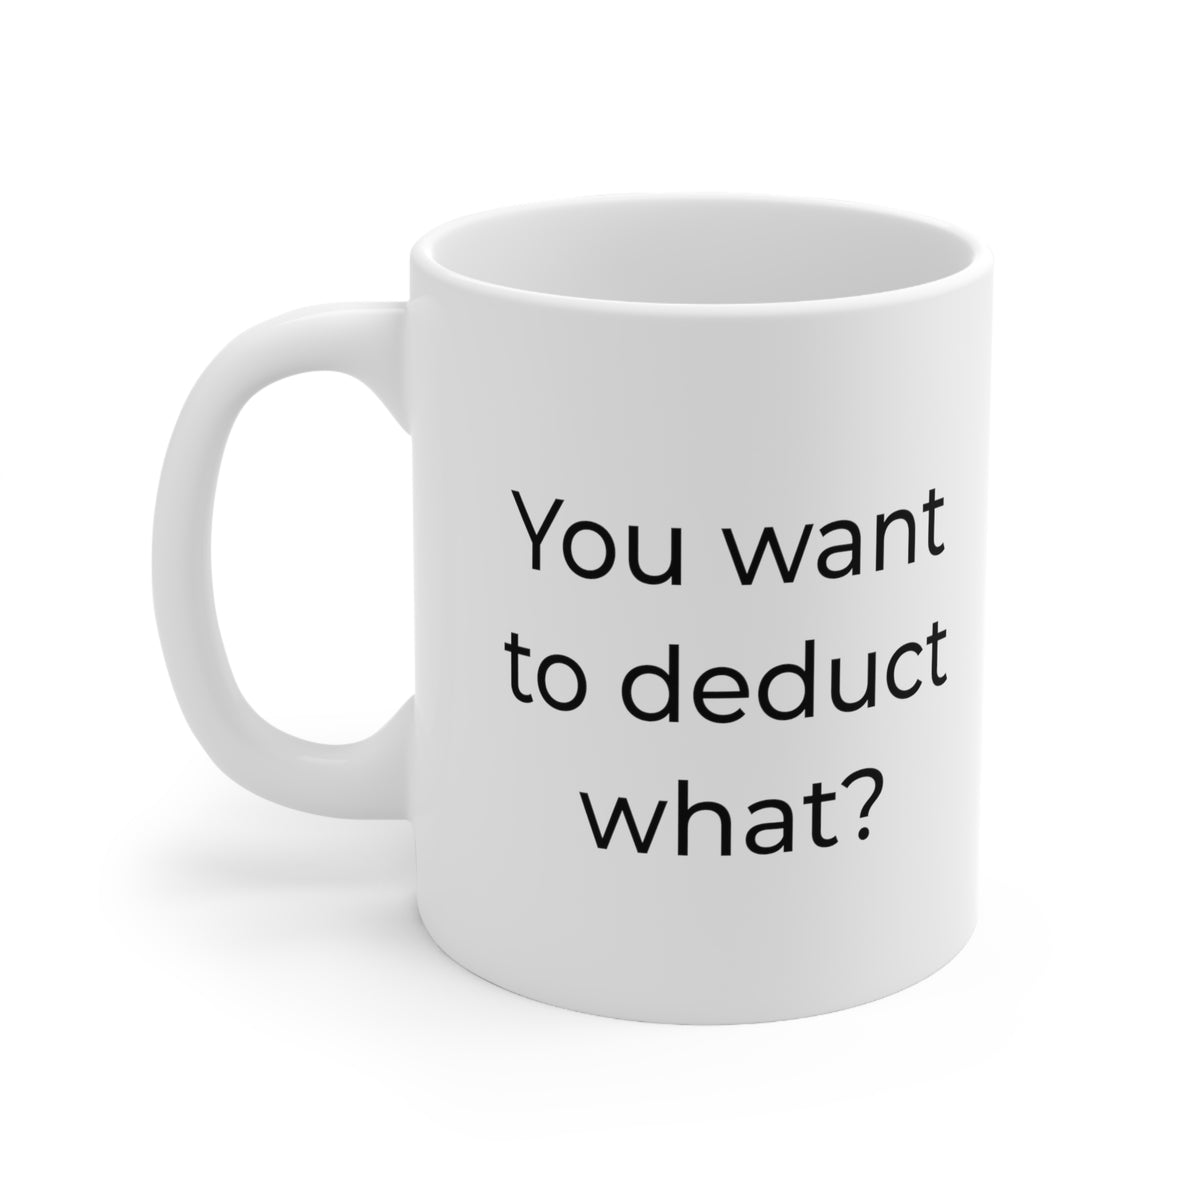 Tax Accountant Coffee Mug - You want to deduct what? - Tax Preparer Coffee Mug For CPA Coworker